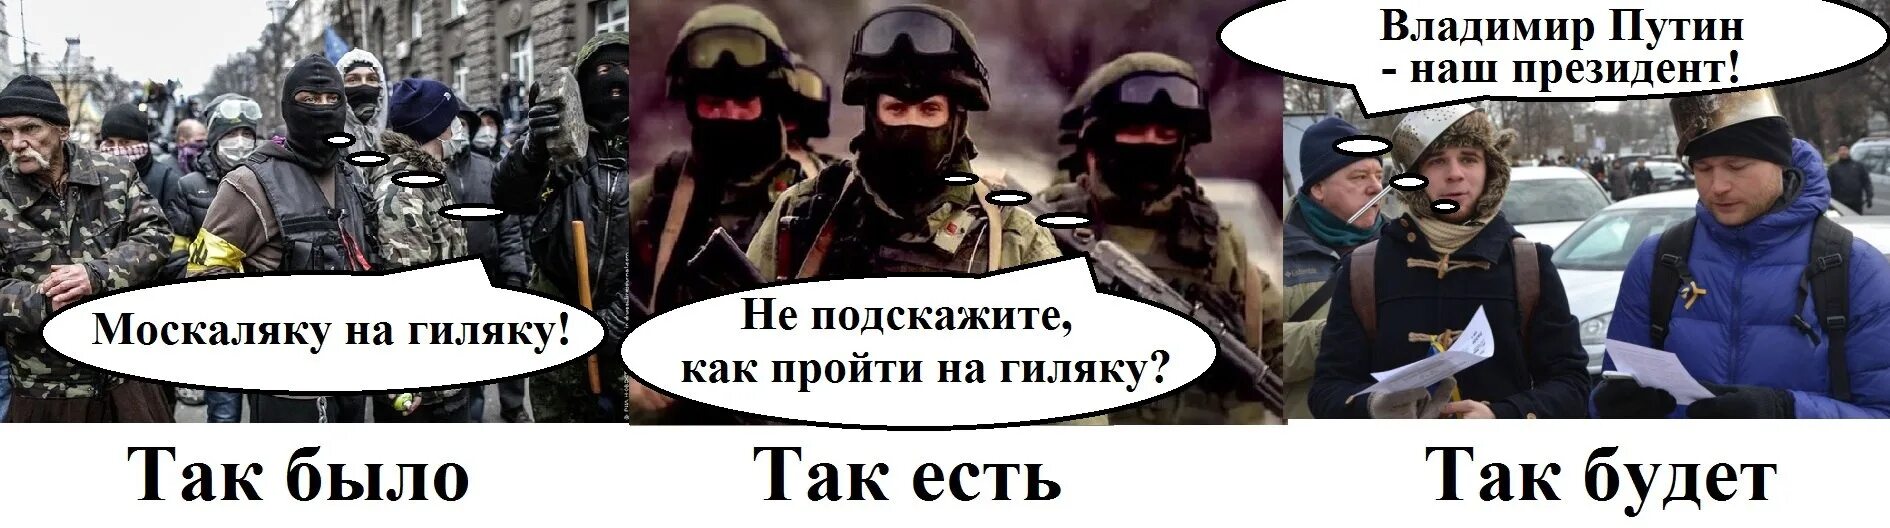 Подскажи откуда. Москаляку на гиляку. Украинцы: москаляку на гиляку. Лозунг украинских националистов москаляку на гиляку. Москаляку на гиляку Мем.